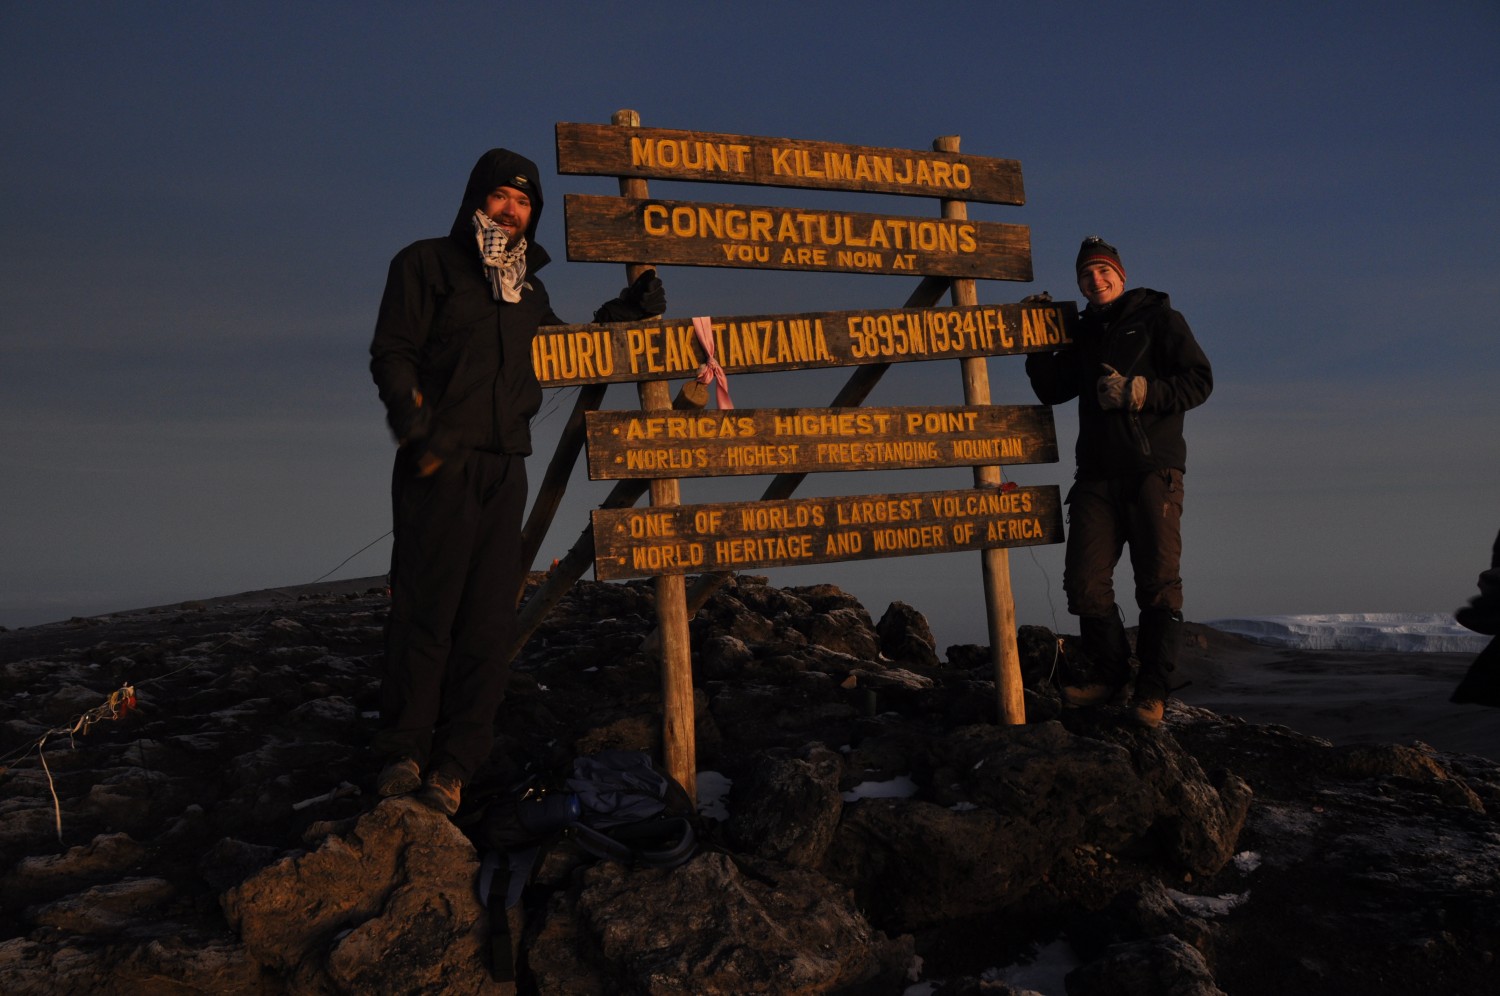 Kilimanjaro summit!